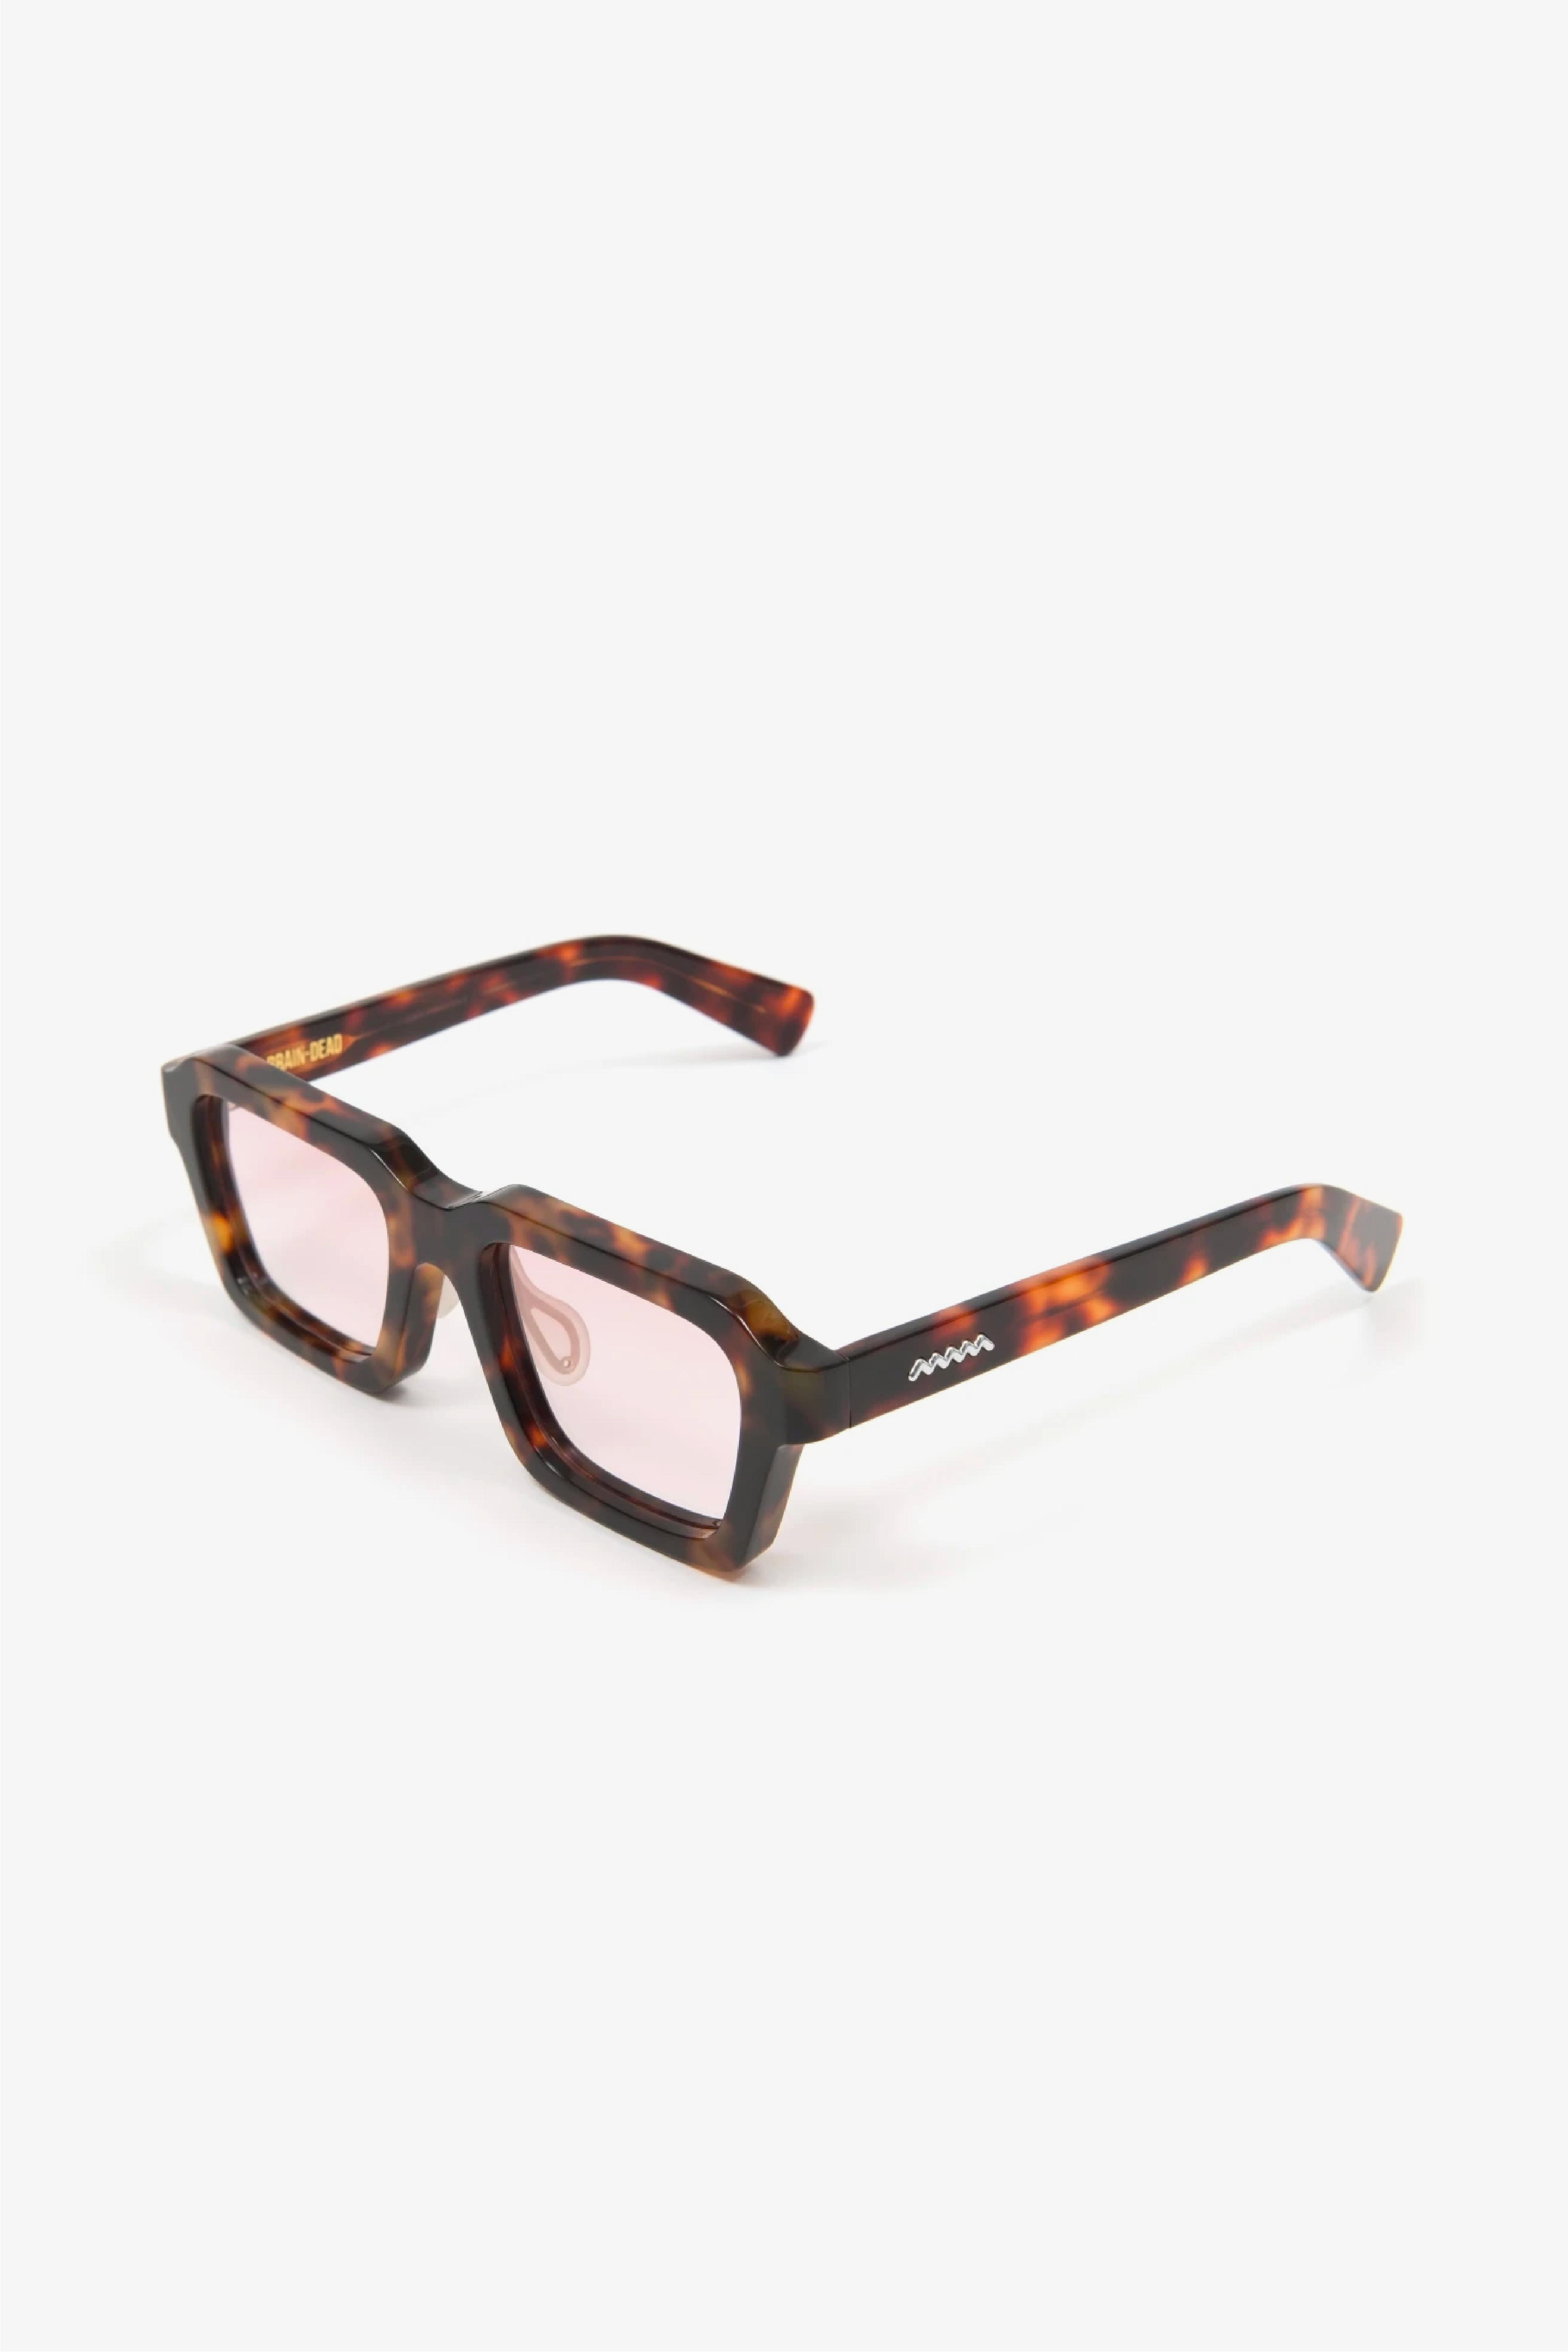 Selectshop FRAME - BRAIN DEAD Brown Staunton Sunglasses All-Accessories Dubai